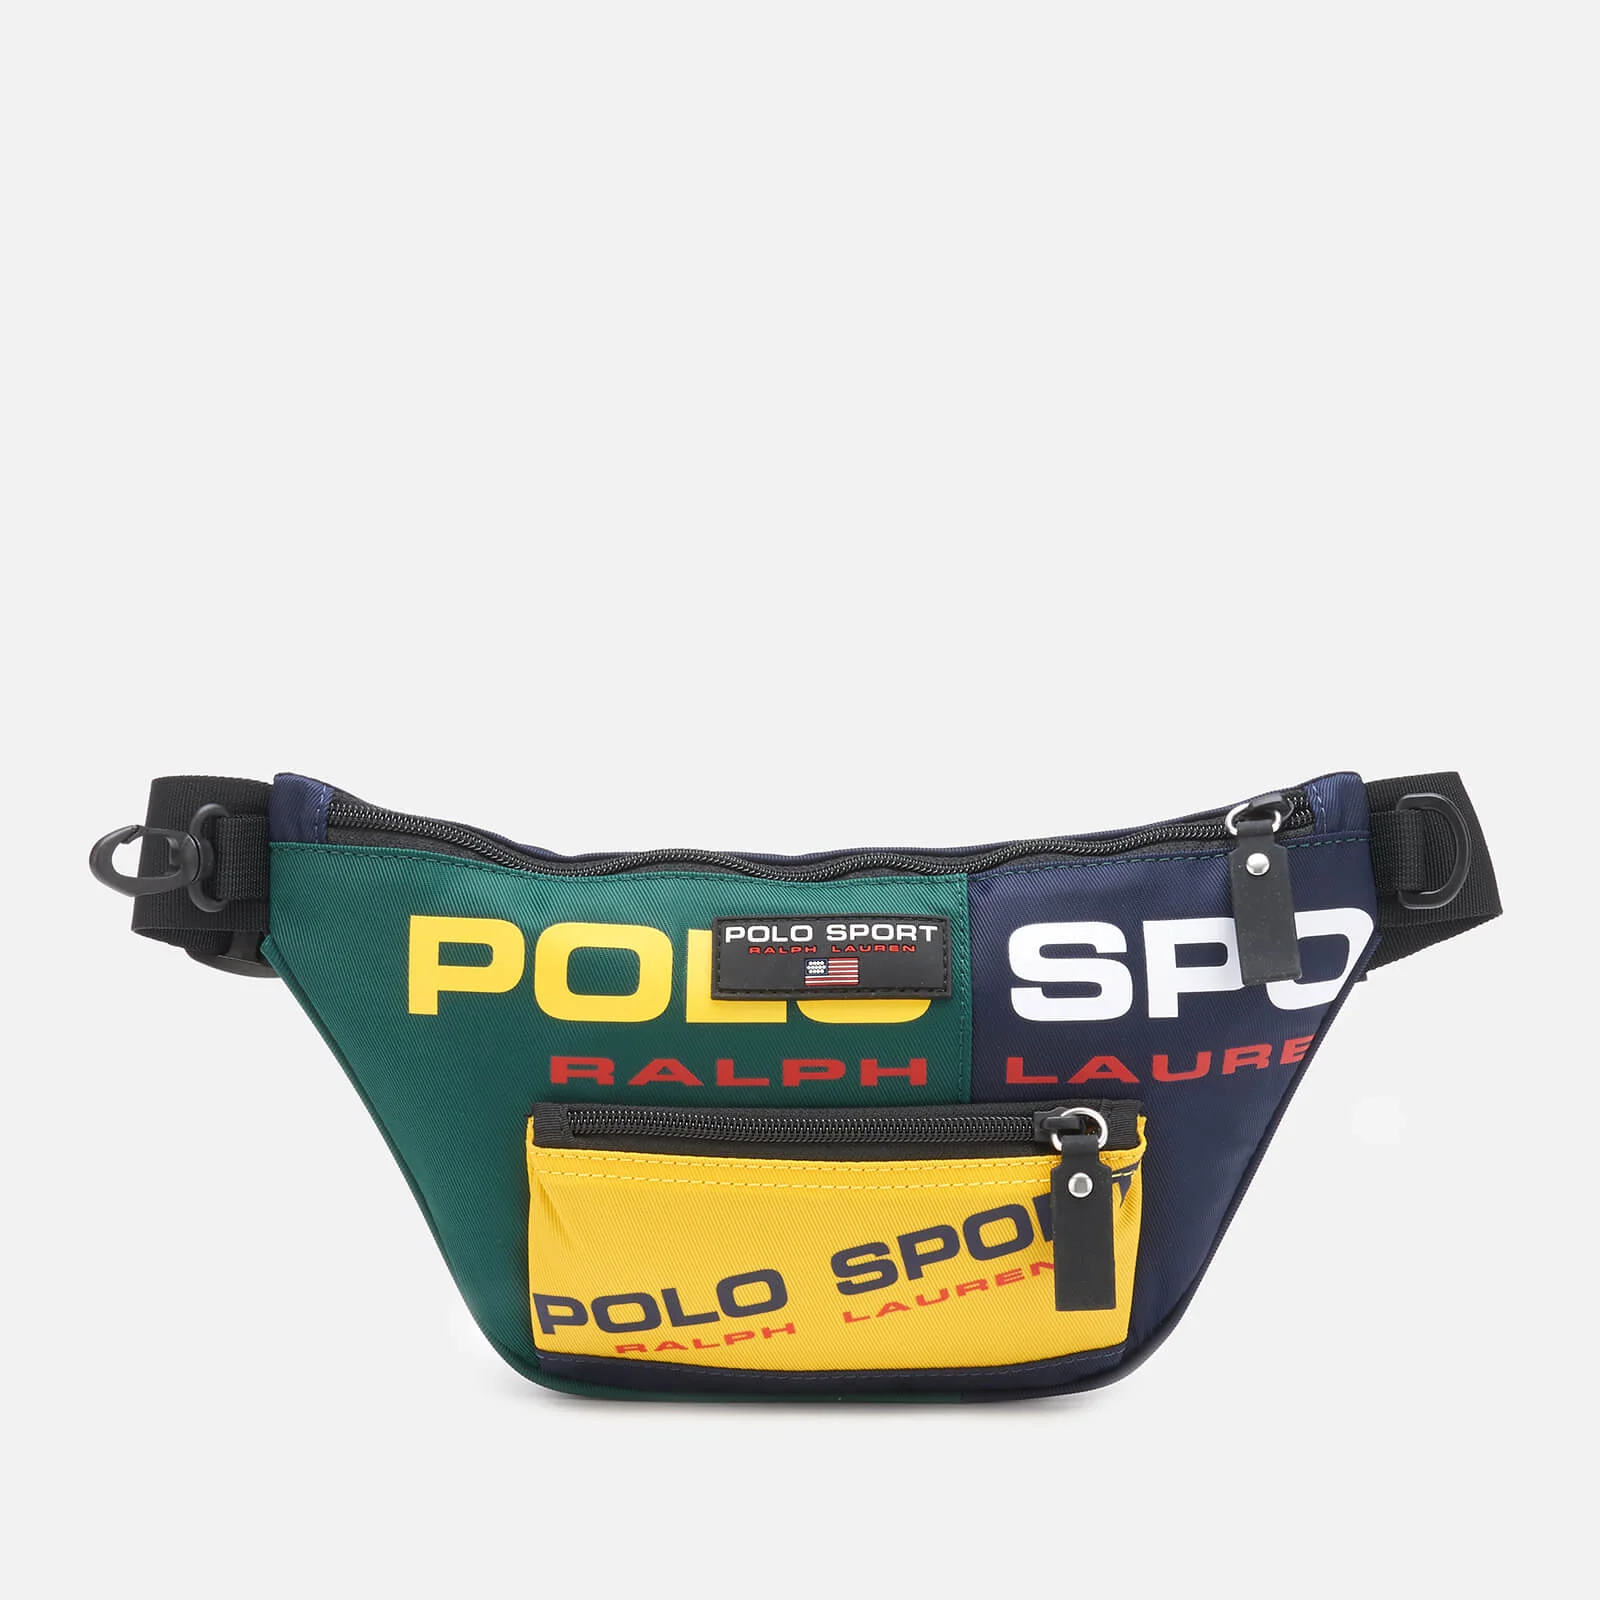 Polo Ralph Lauren Men's Polo Sport Bumbag - Navy/Green/Yellow Image 1